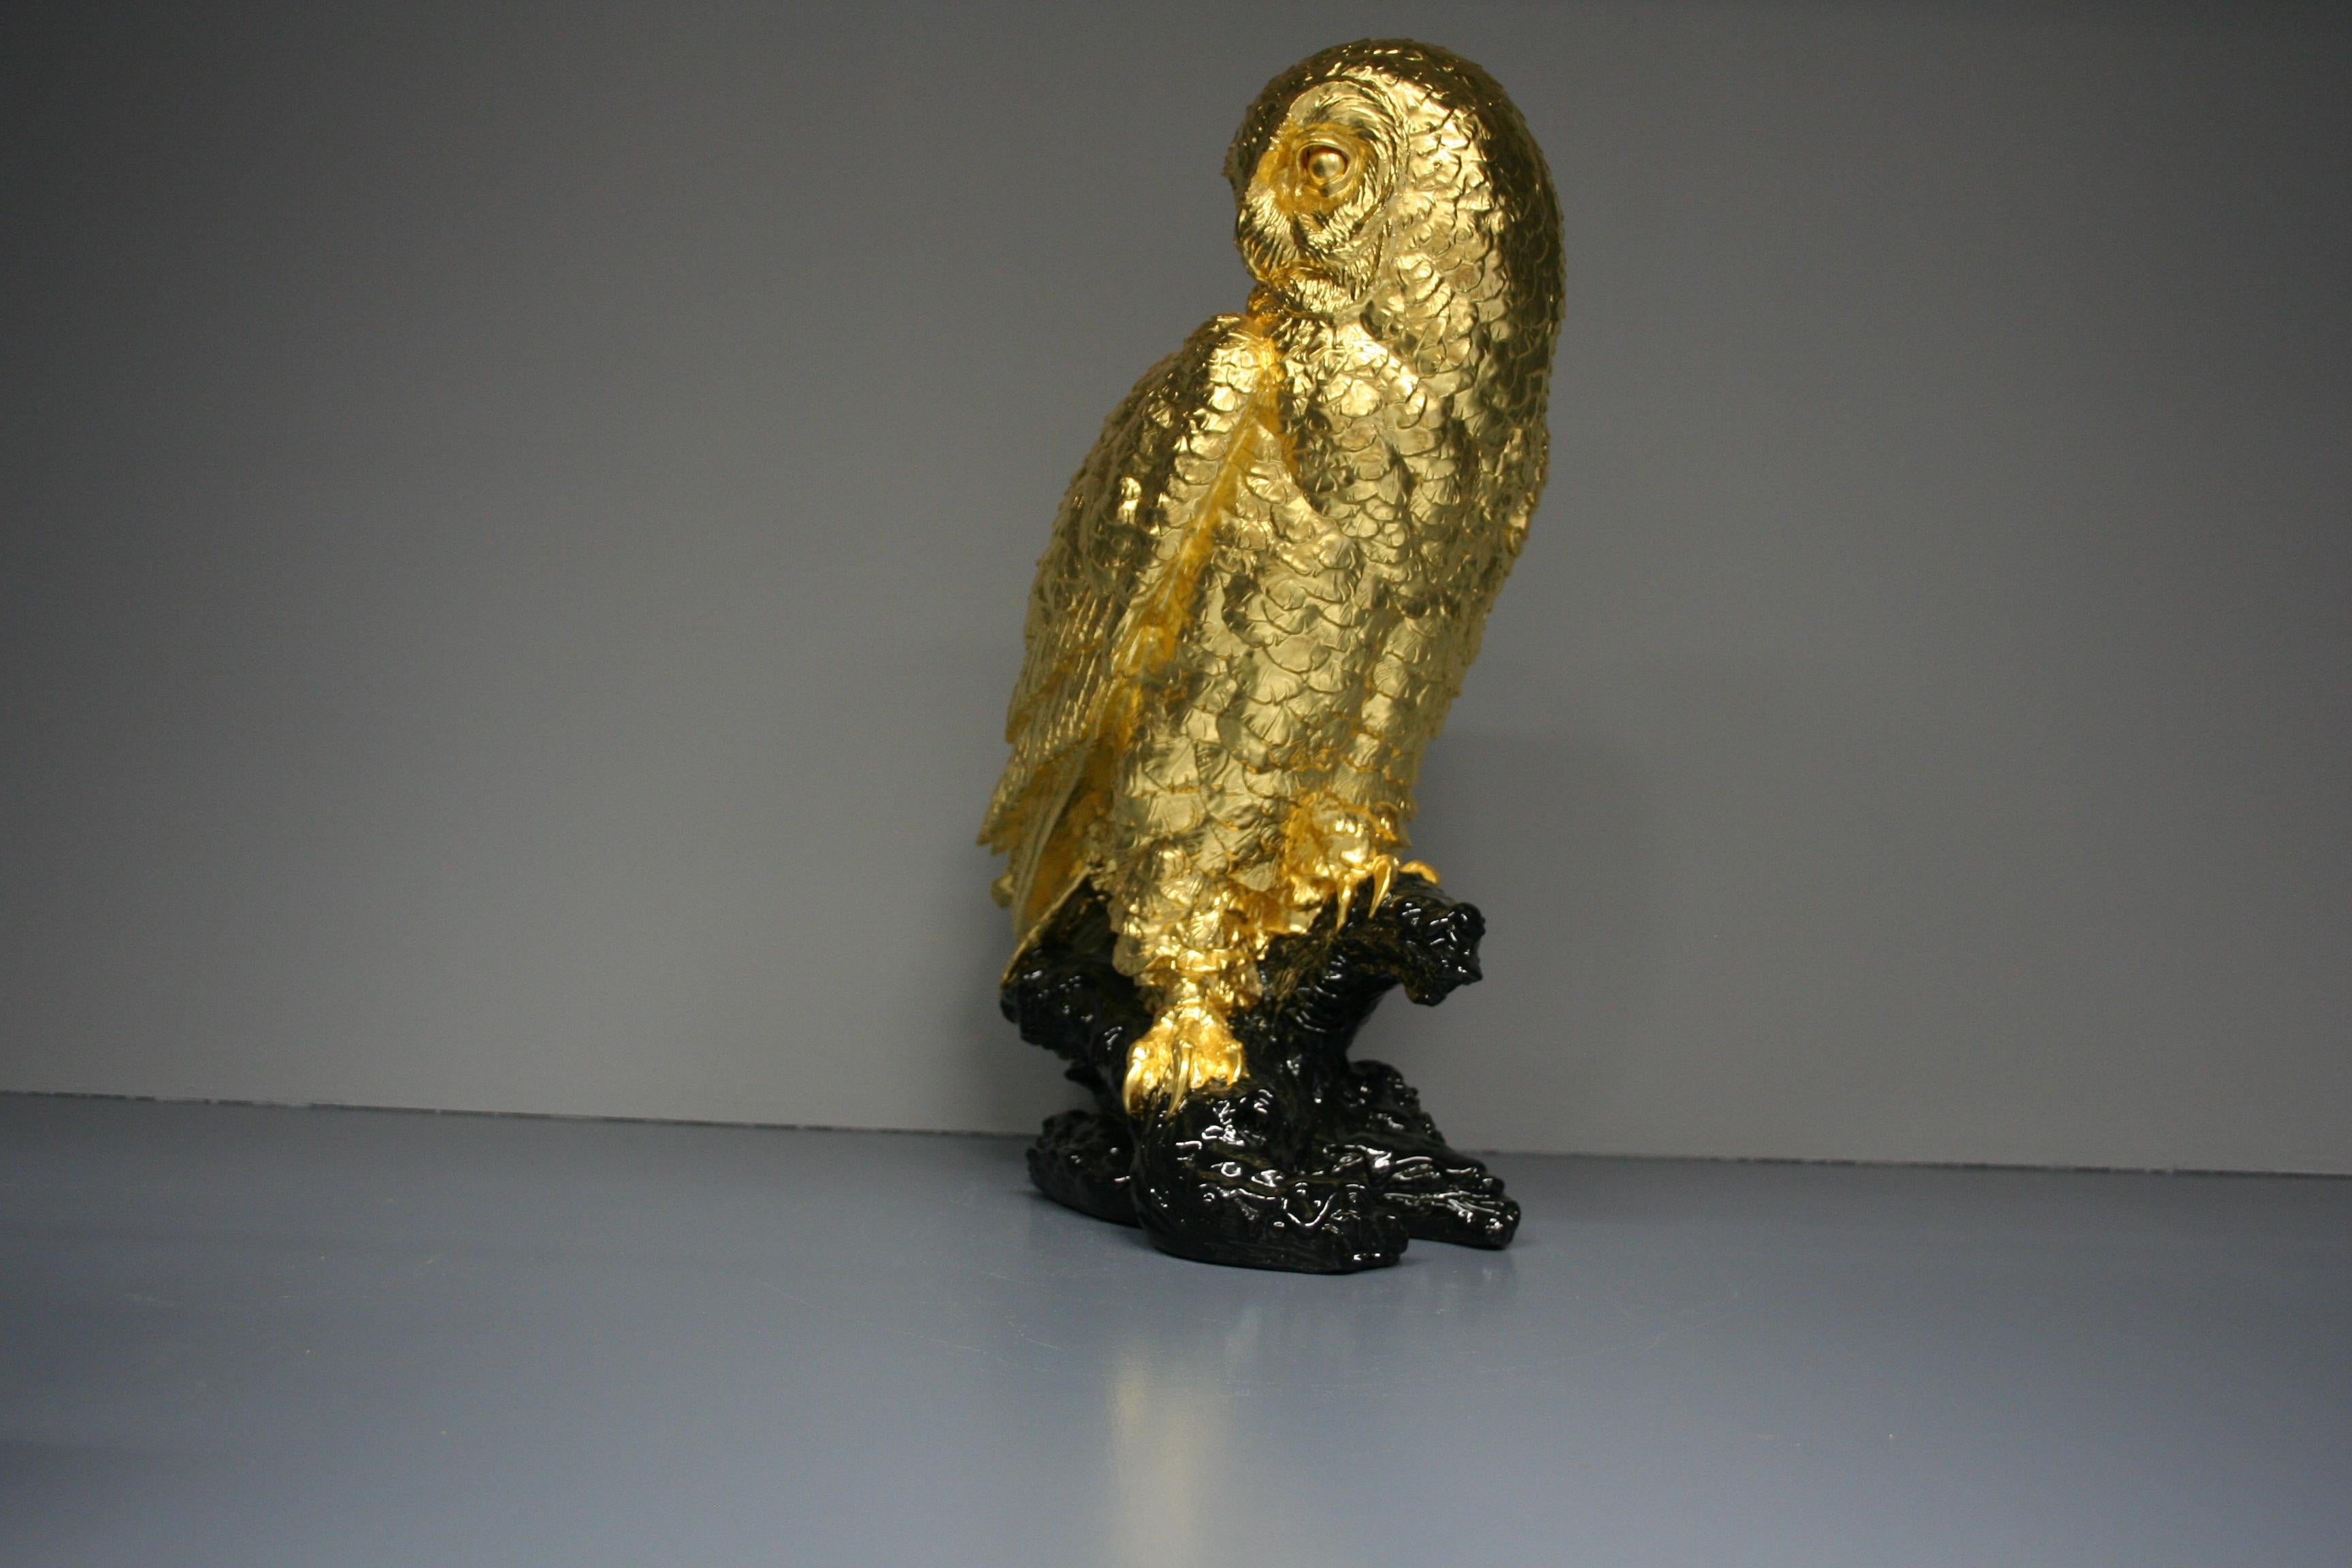 Goldene Eule 24 Karat vergoldet (Realismus), Sculpture, von Steven